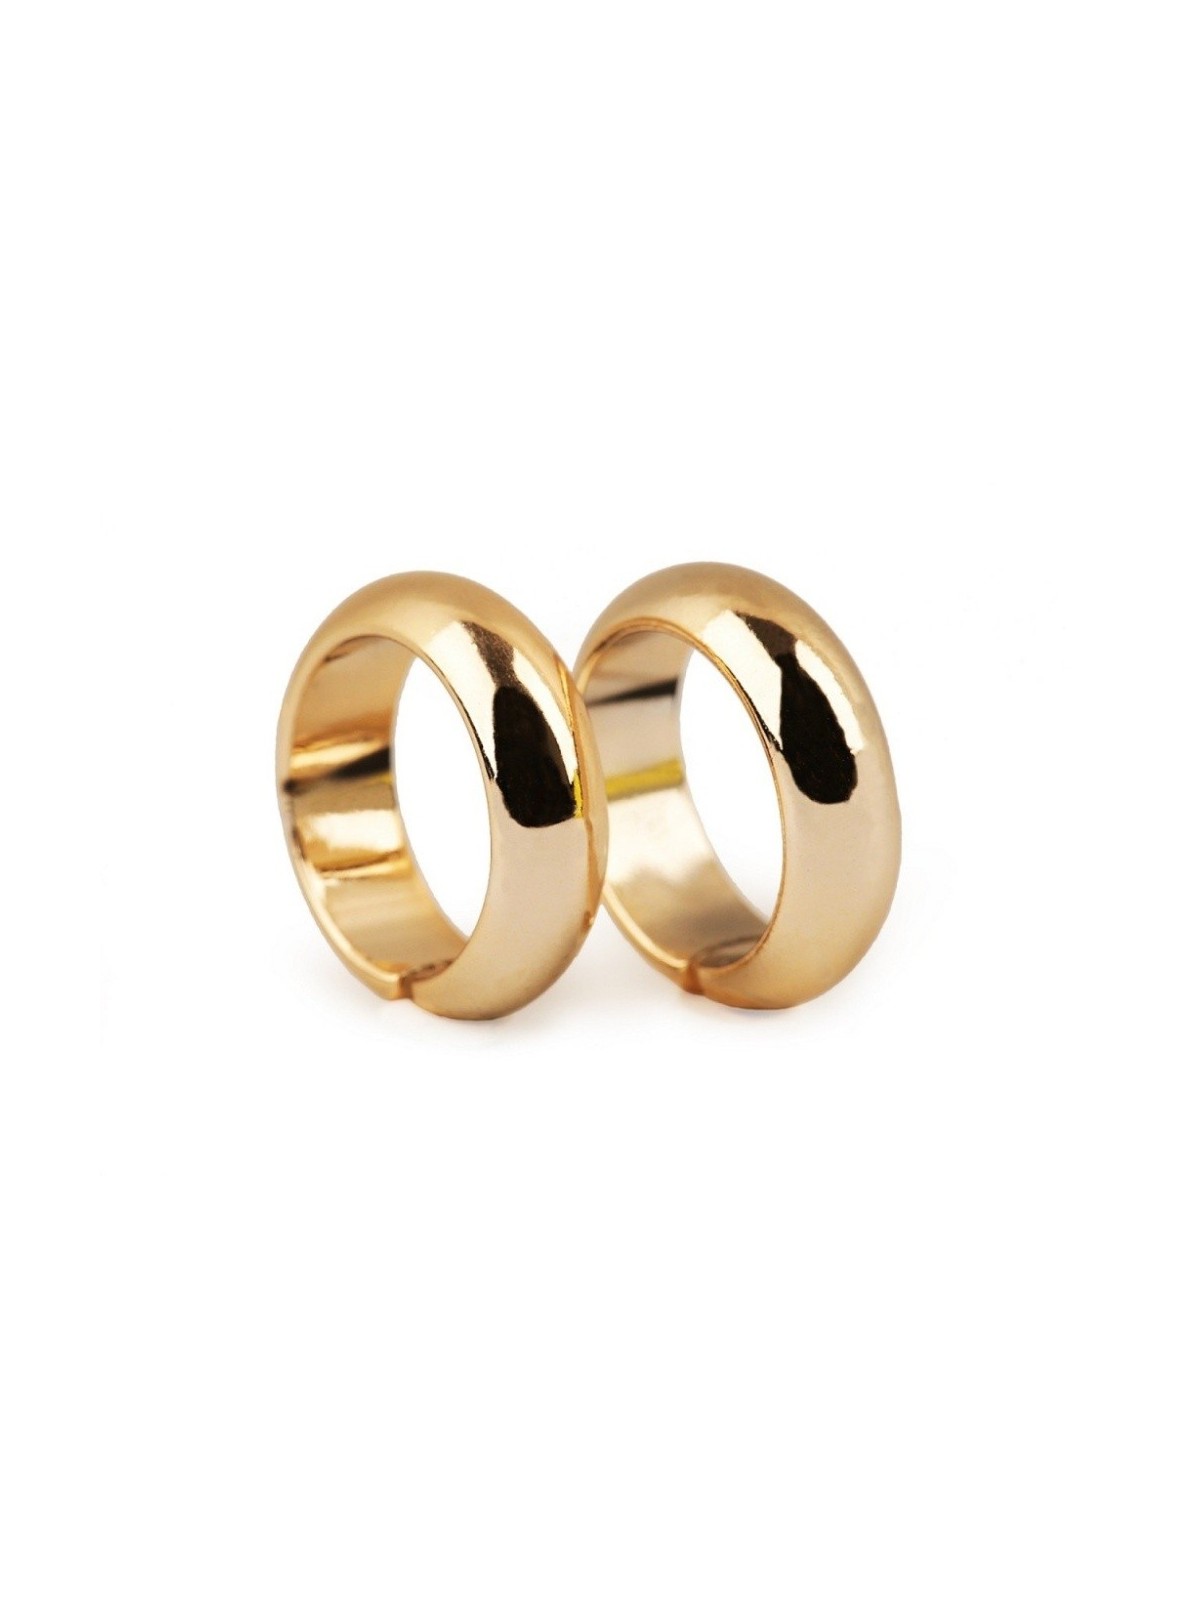 Decorative wedding rings gold - 2pcs - same size